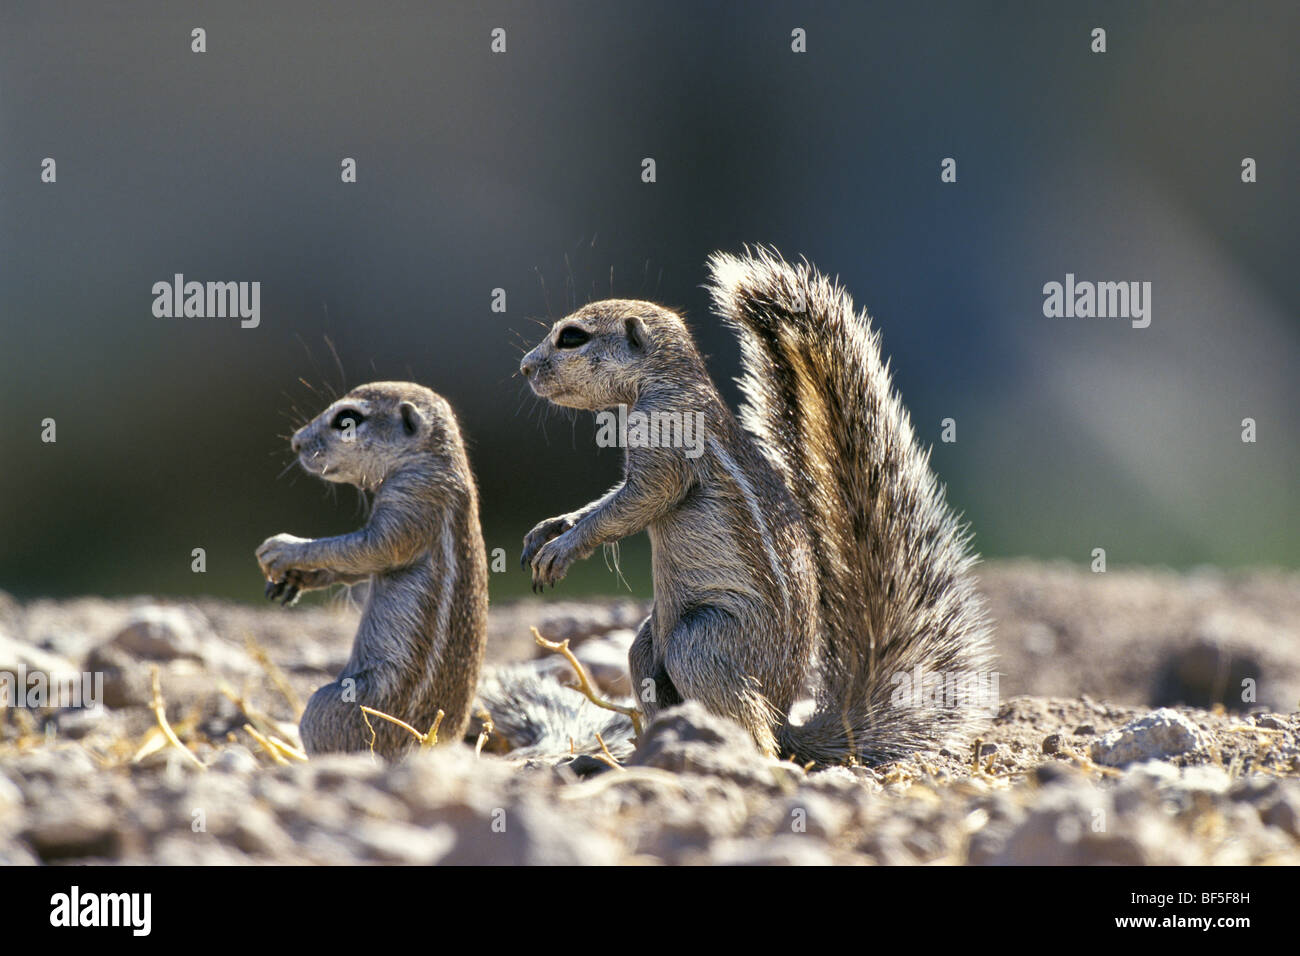 Cape Ground Squirrels (Xerus inauris), Namibia, Africa Stock Photo